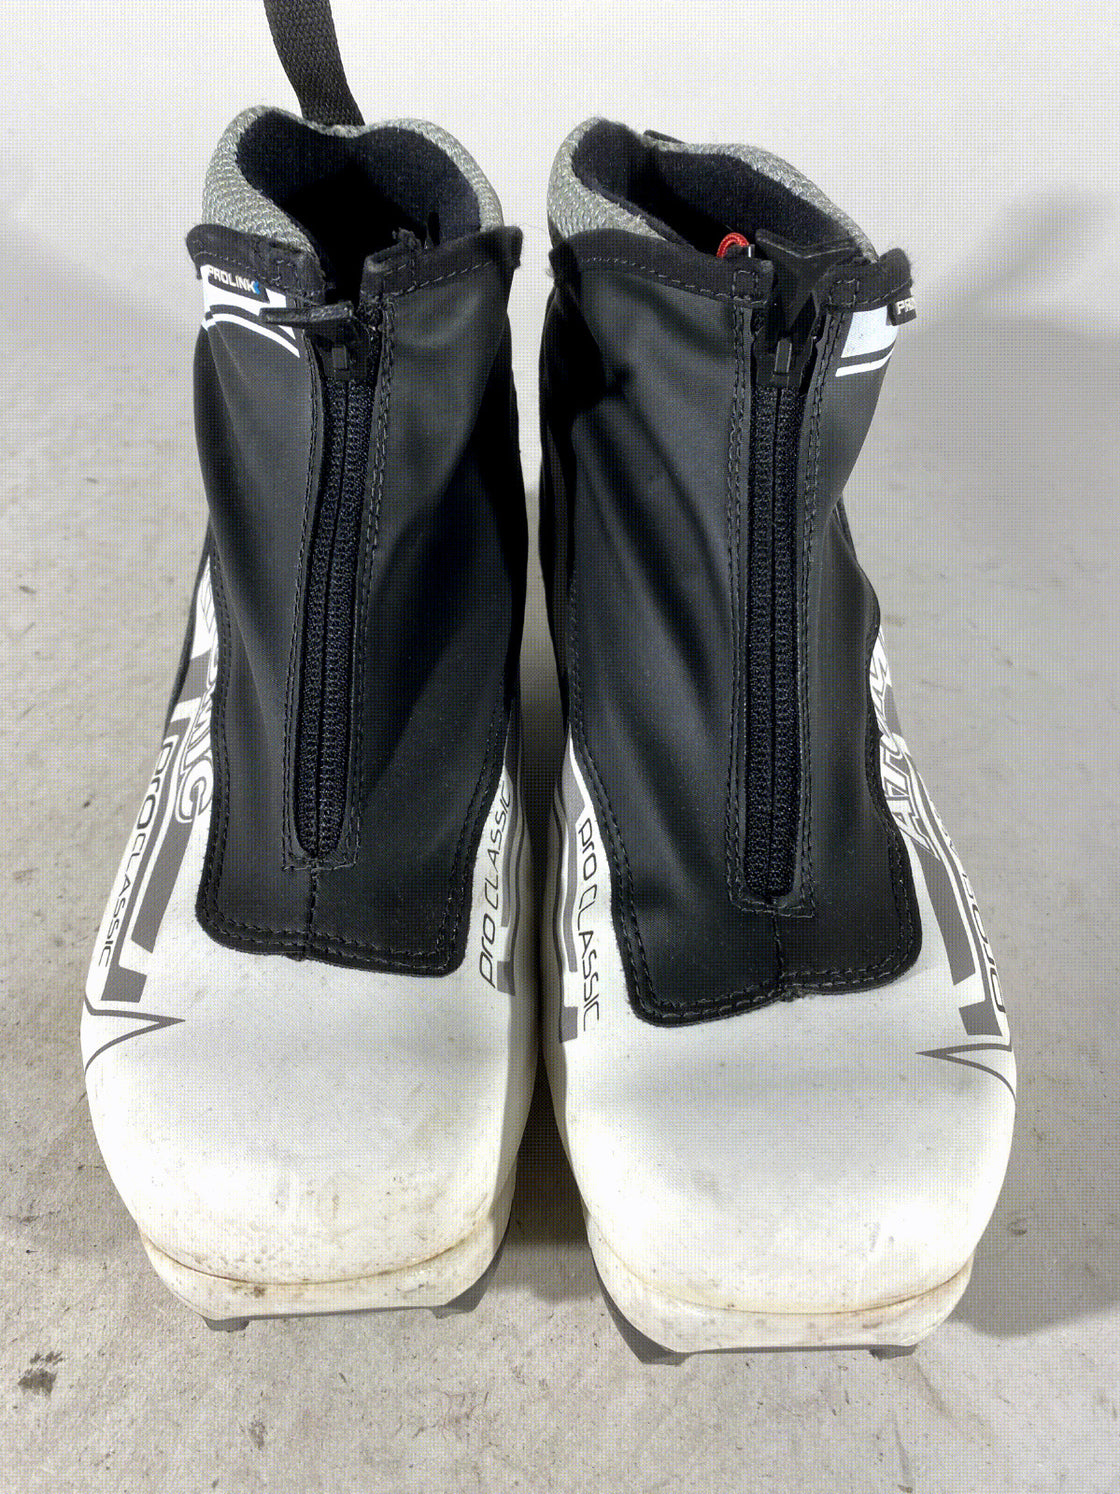 Atomic Pro Classic Nordic Cross Country Ski Boots Size EU38 US6.5 NNN Prolink